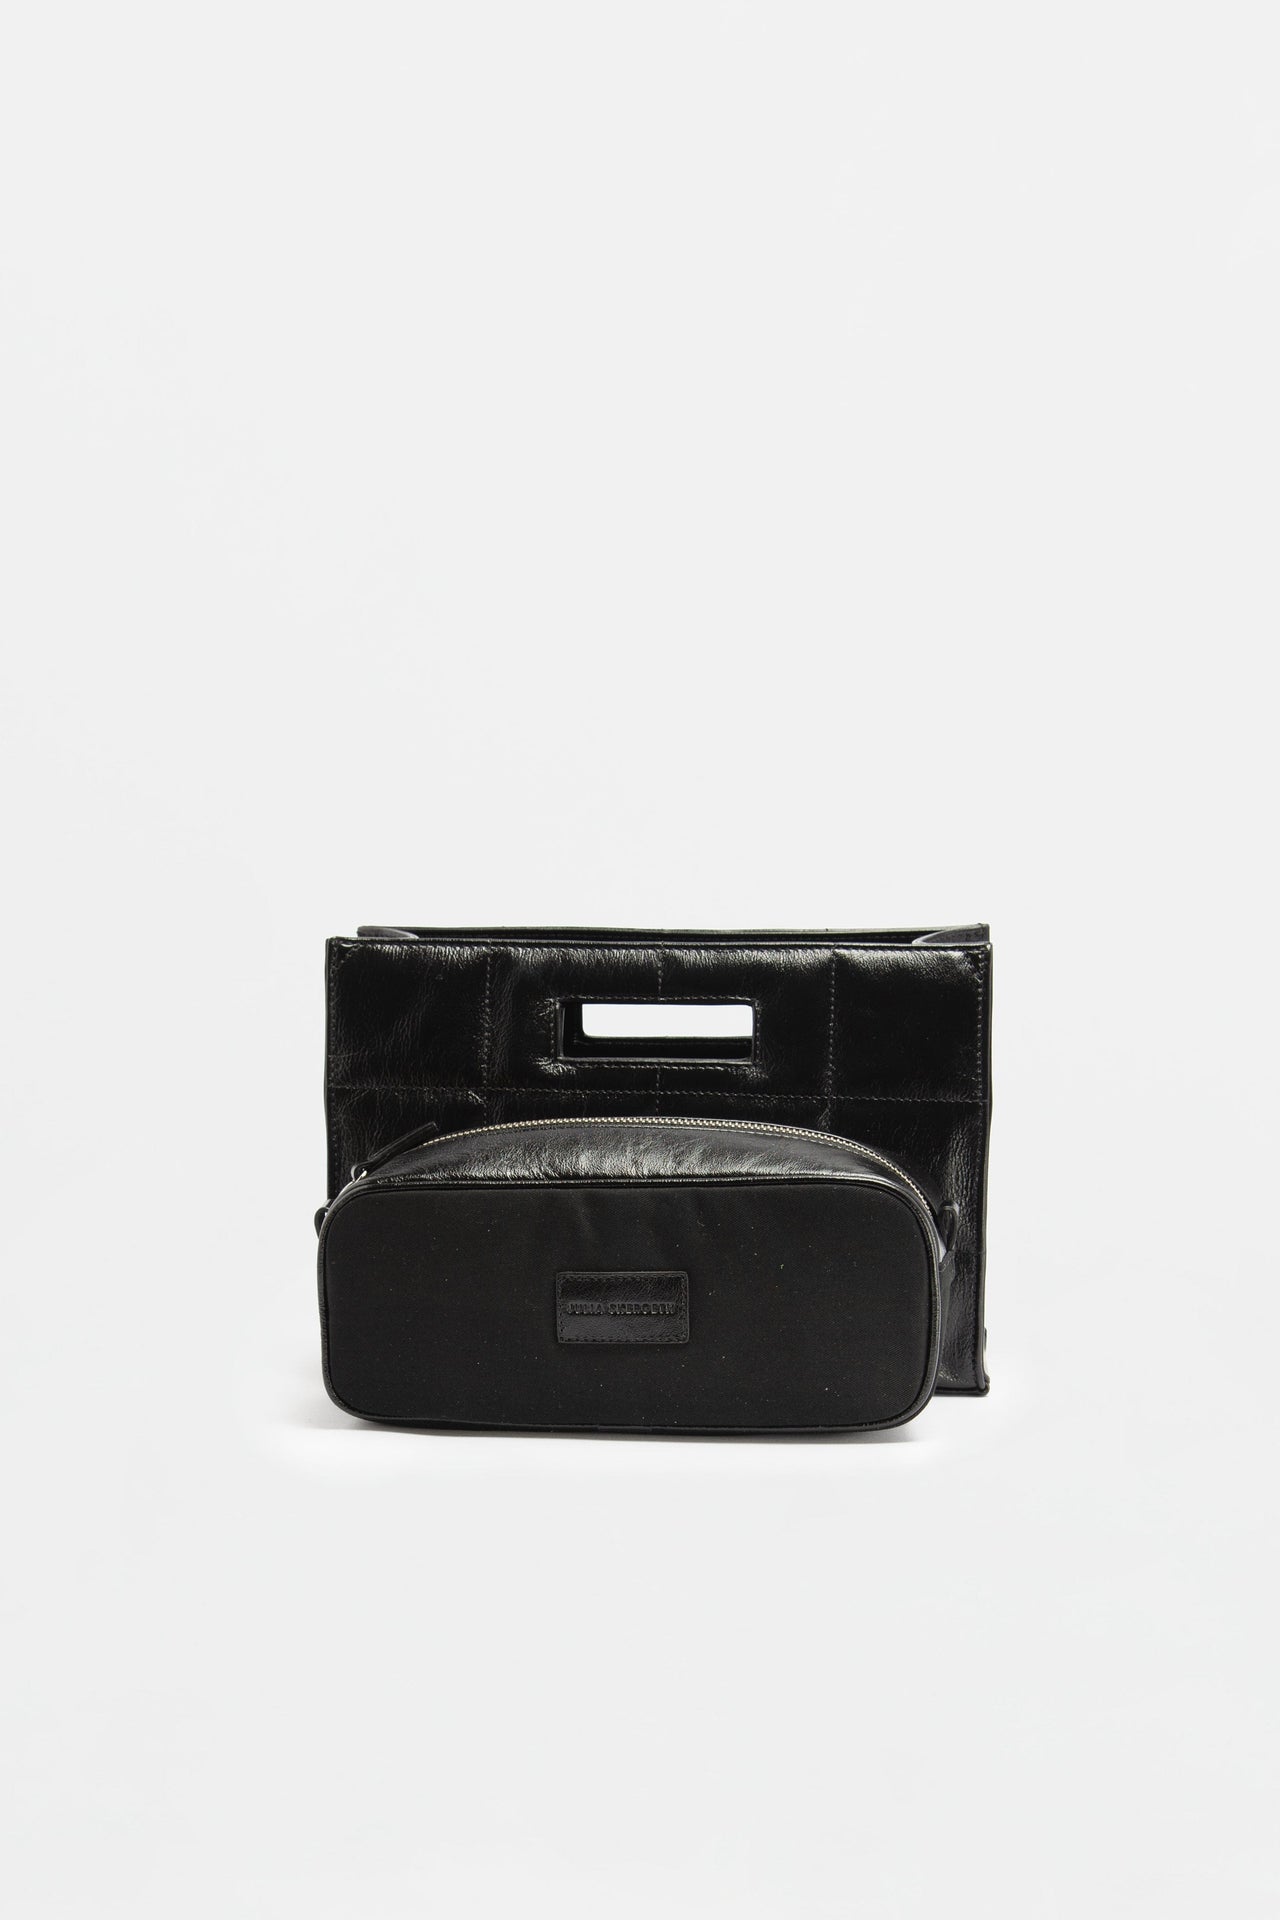 The QUILTED BAG SMALL Vintage Black - JULIA SKERGETH